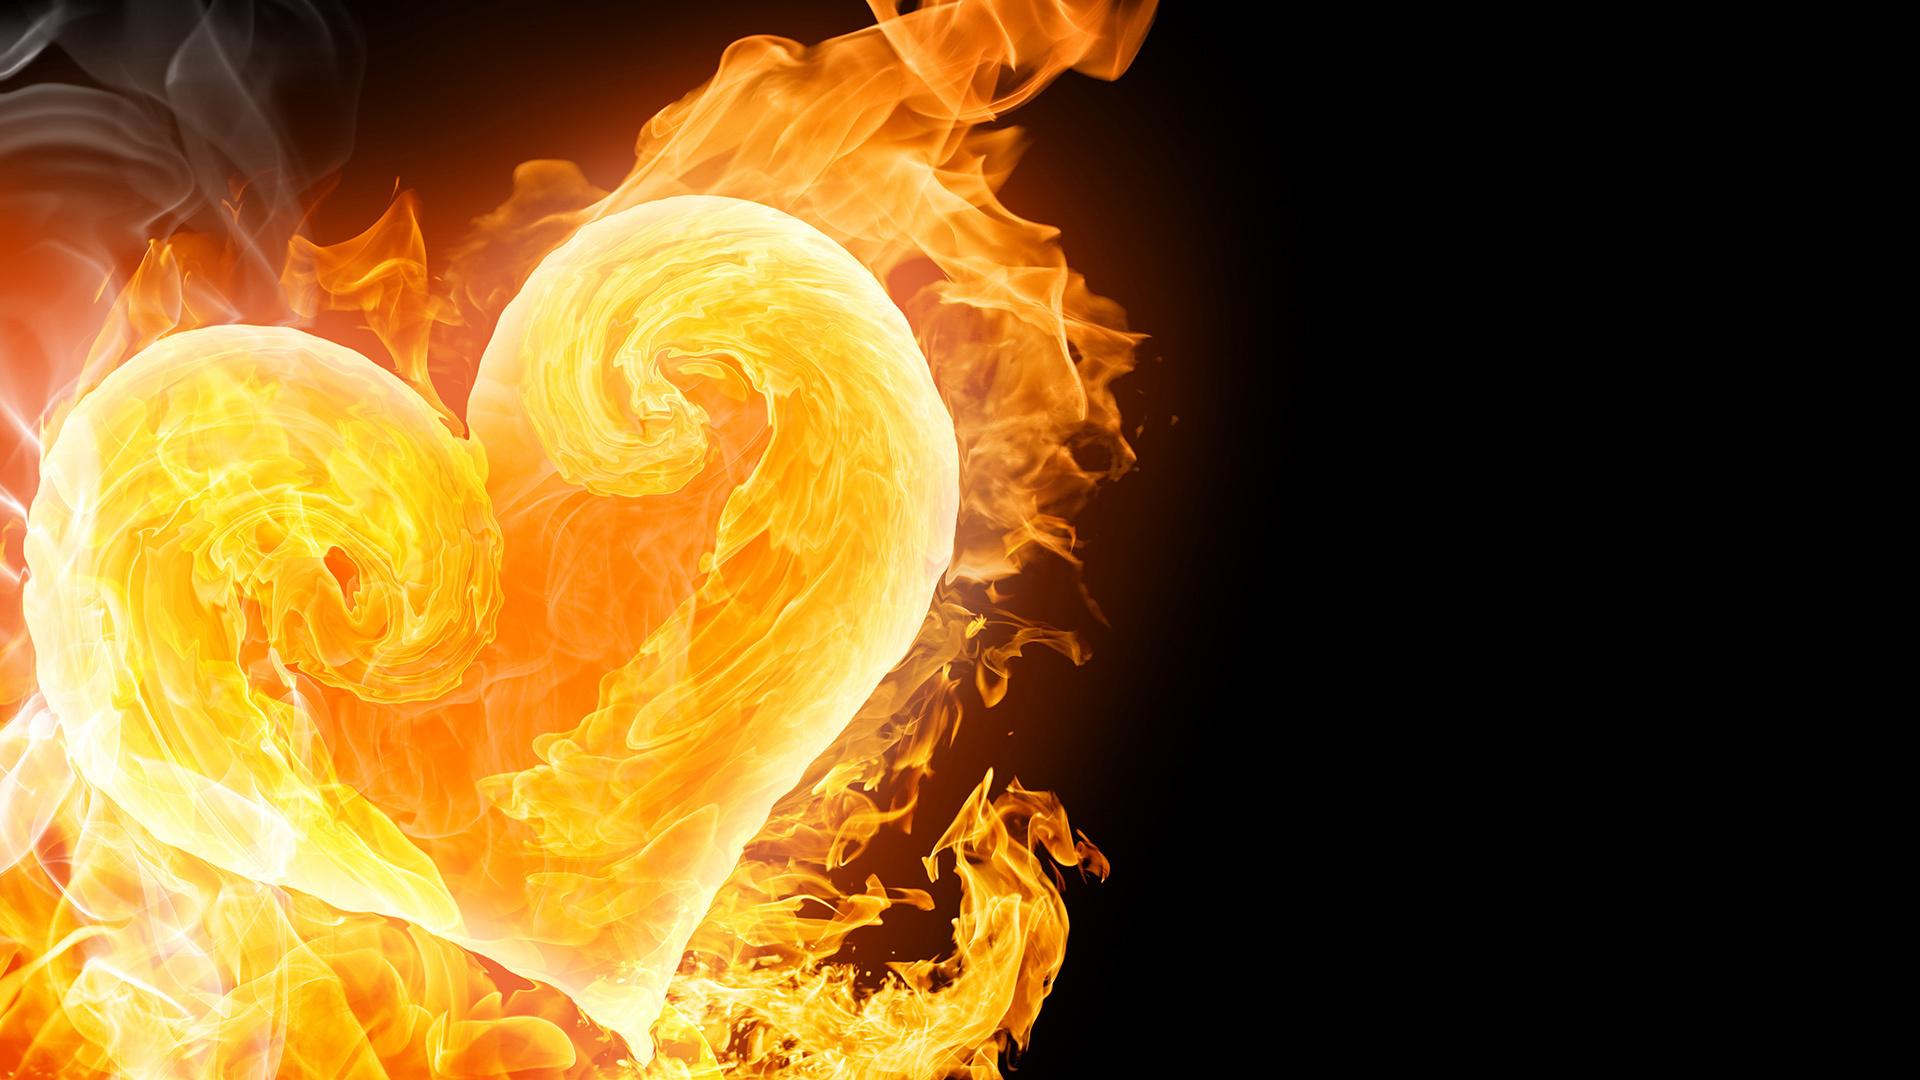 31691-Burning_Heart_In_Love-1920x10